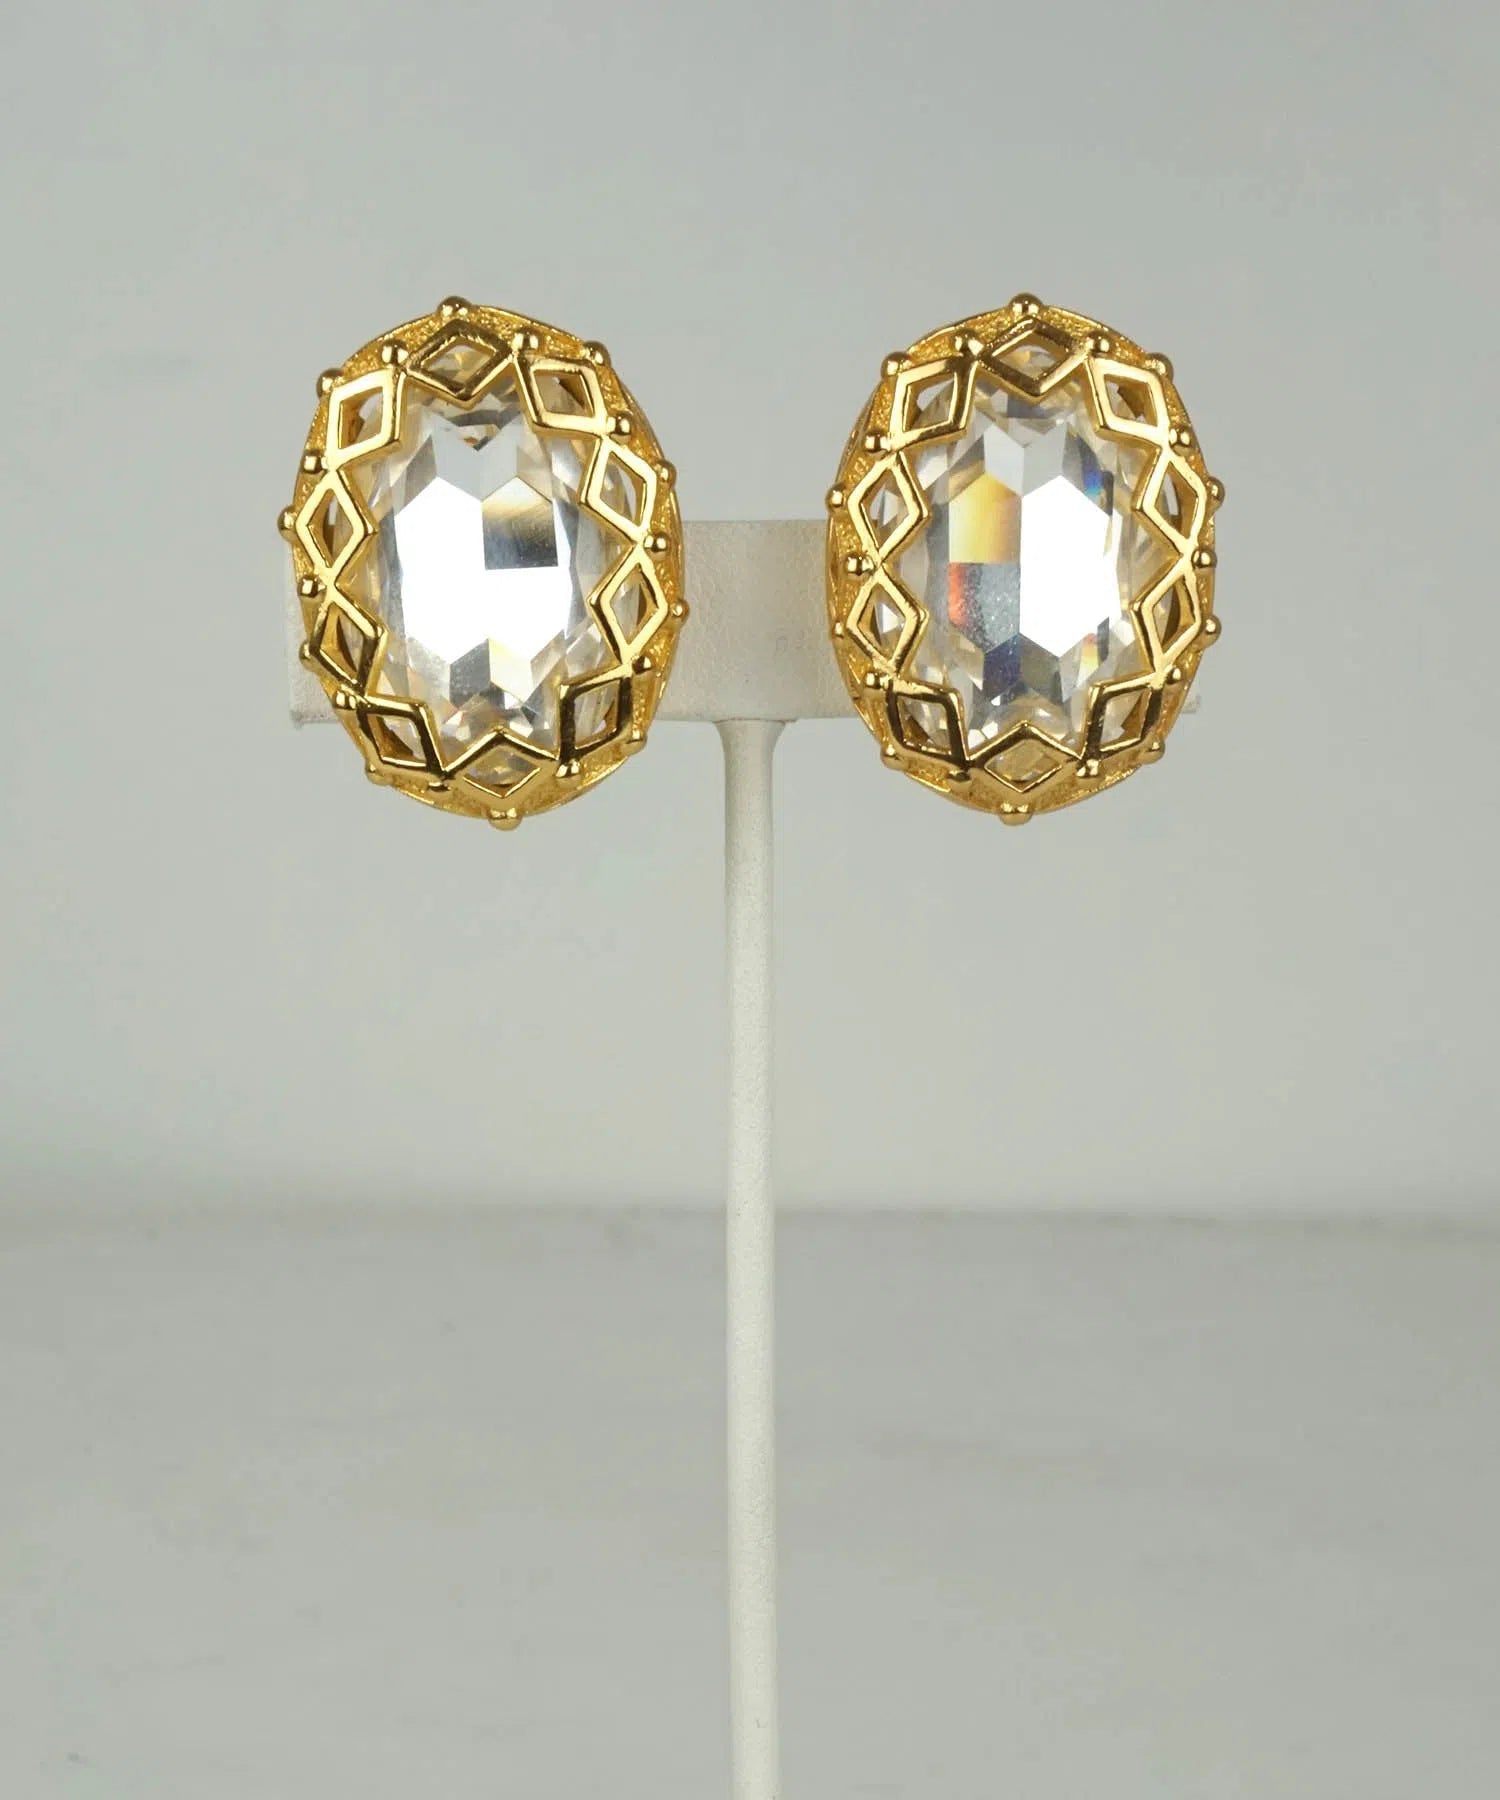 Christian Dior Vintage Headlight Earrings 1960's-1970's